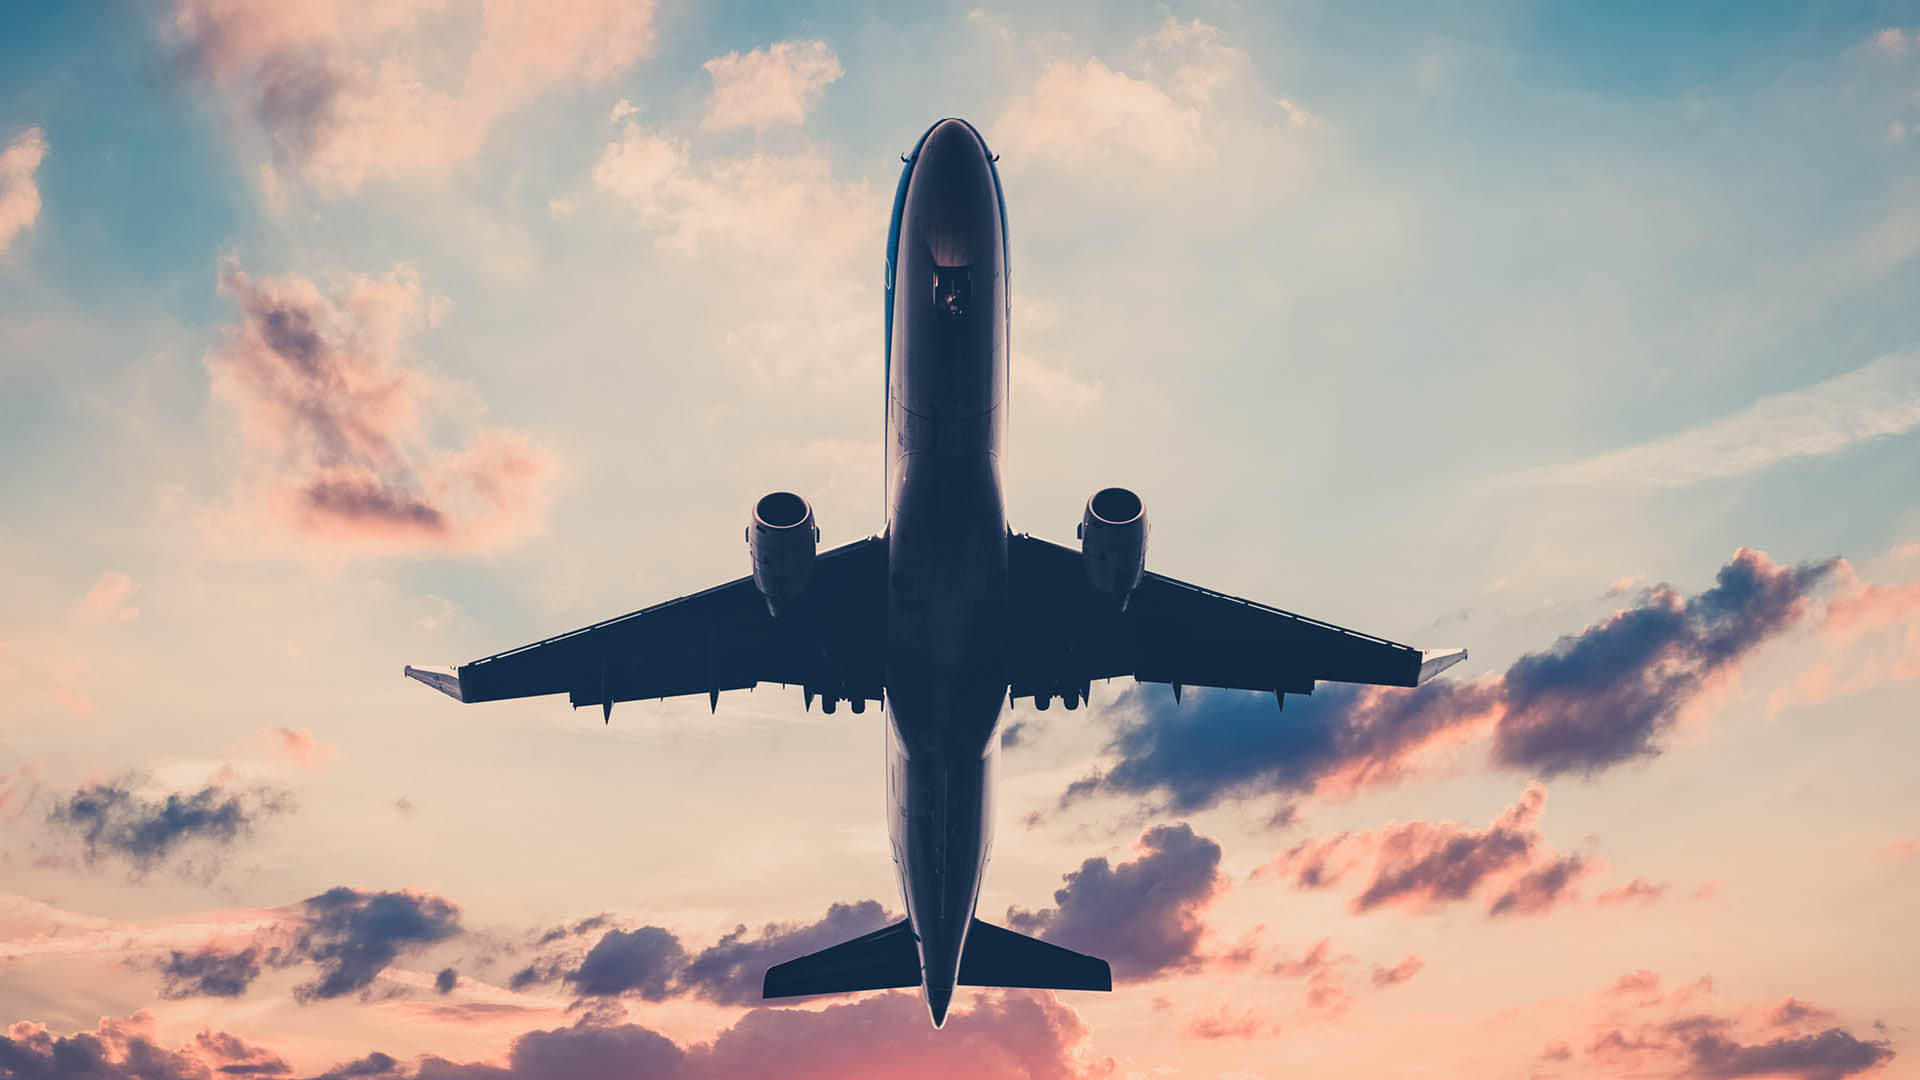 Transport-aviation-plane-sky